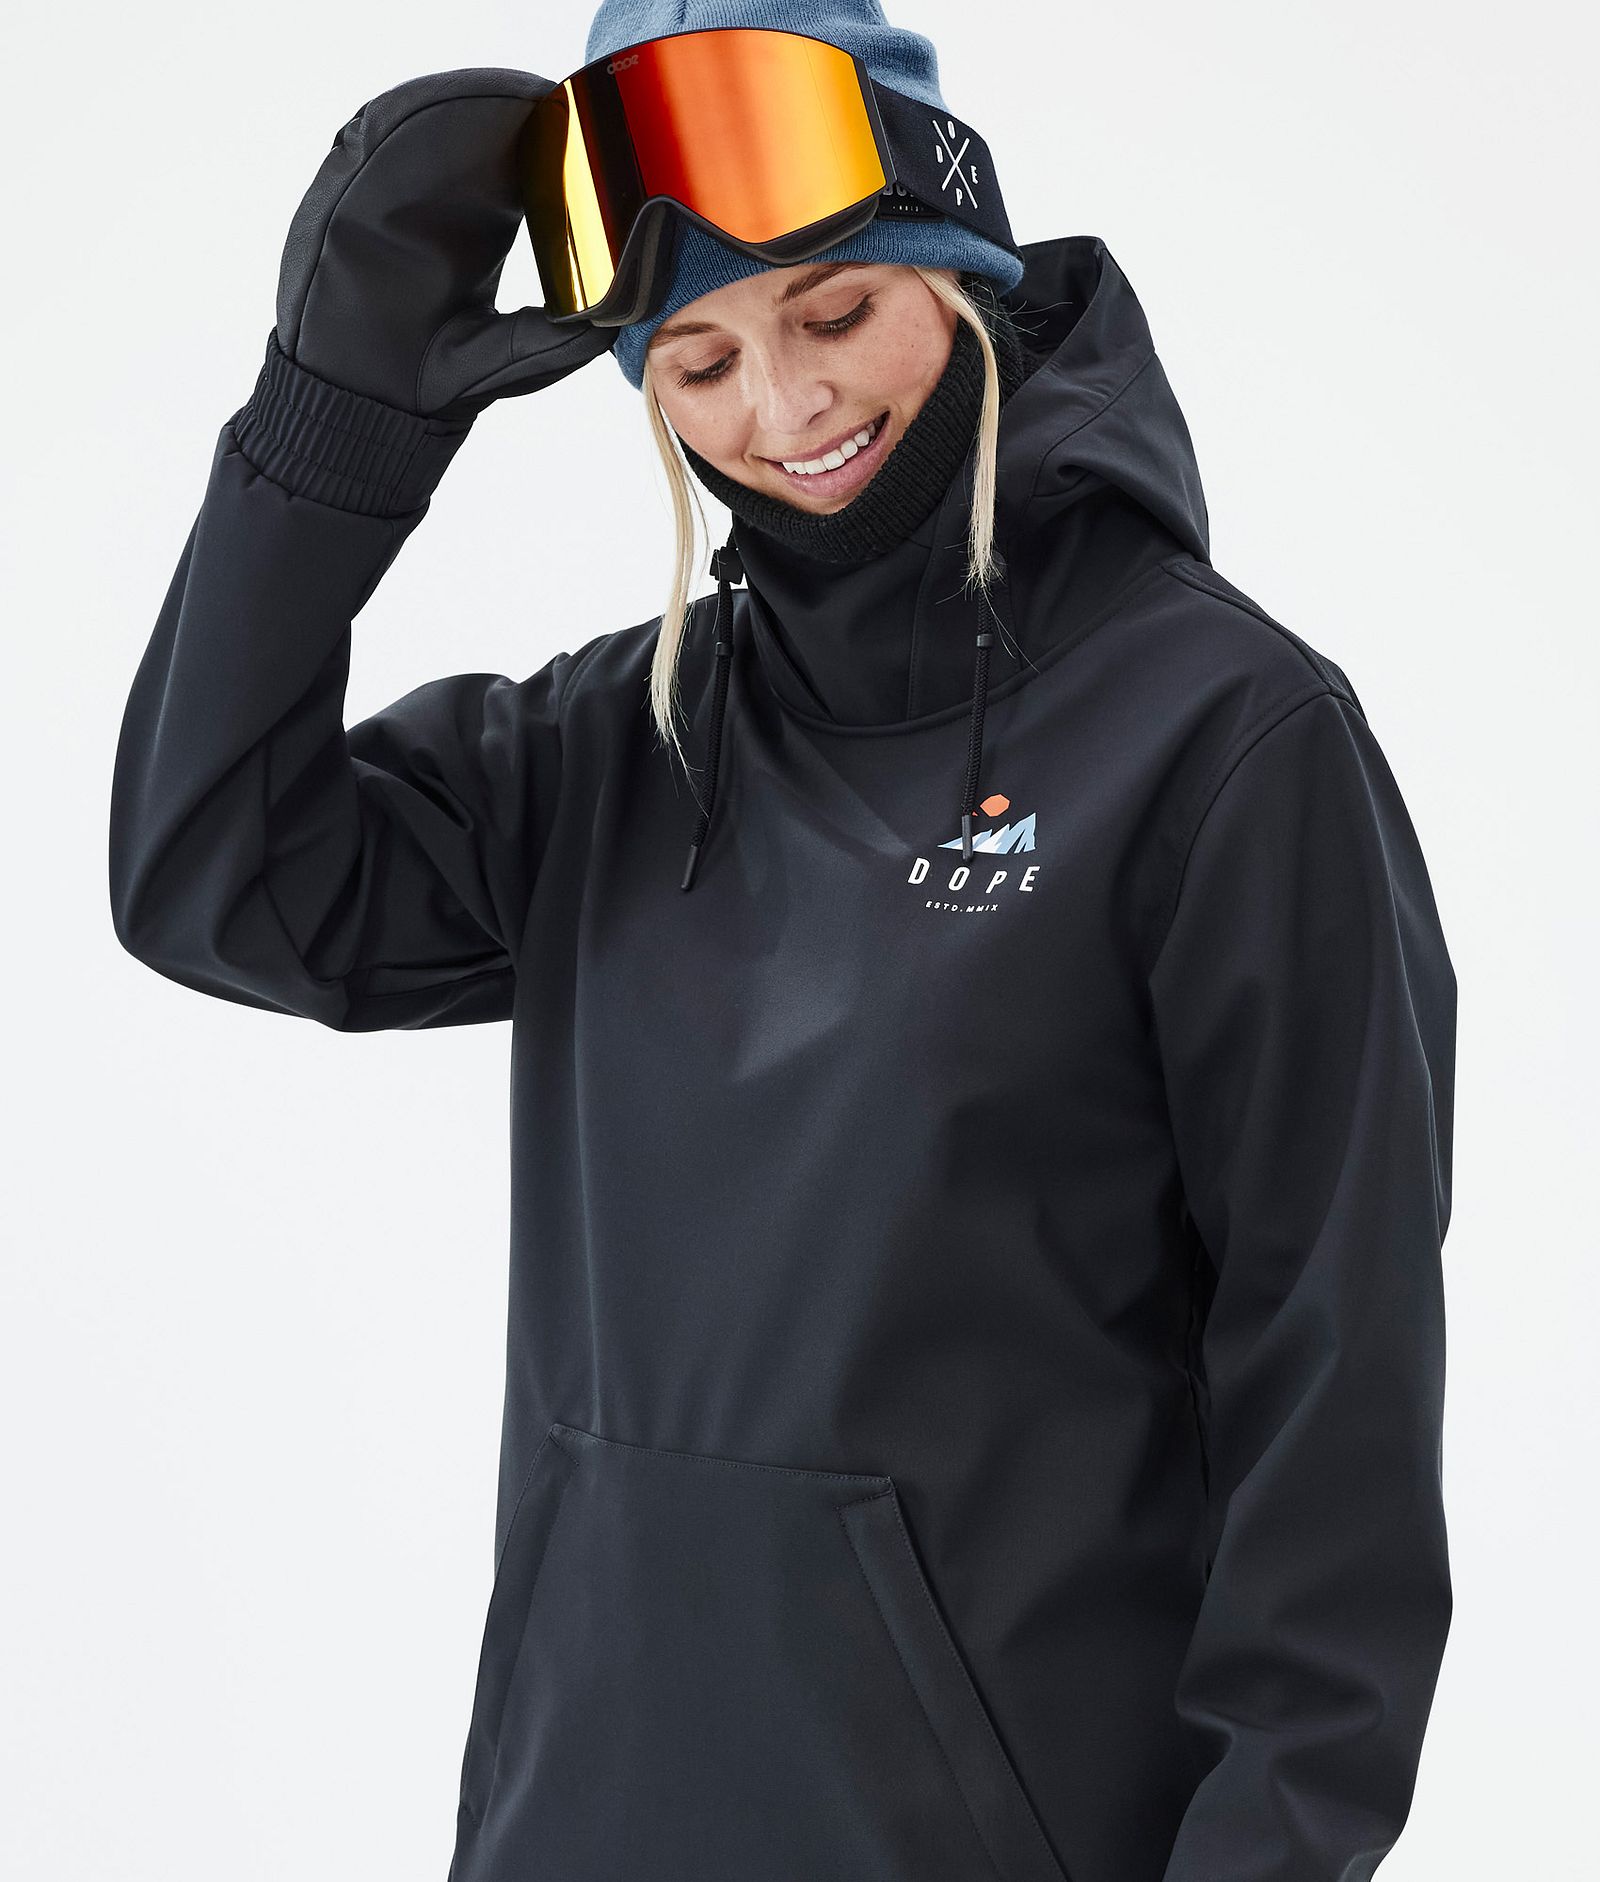 Dope Yeti W Veste Snowboard Femme Ice Black, Image 2 sur 7